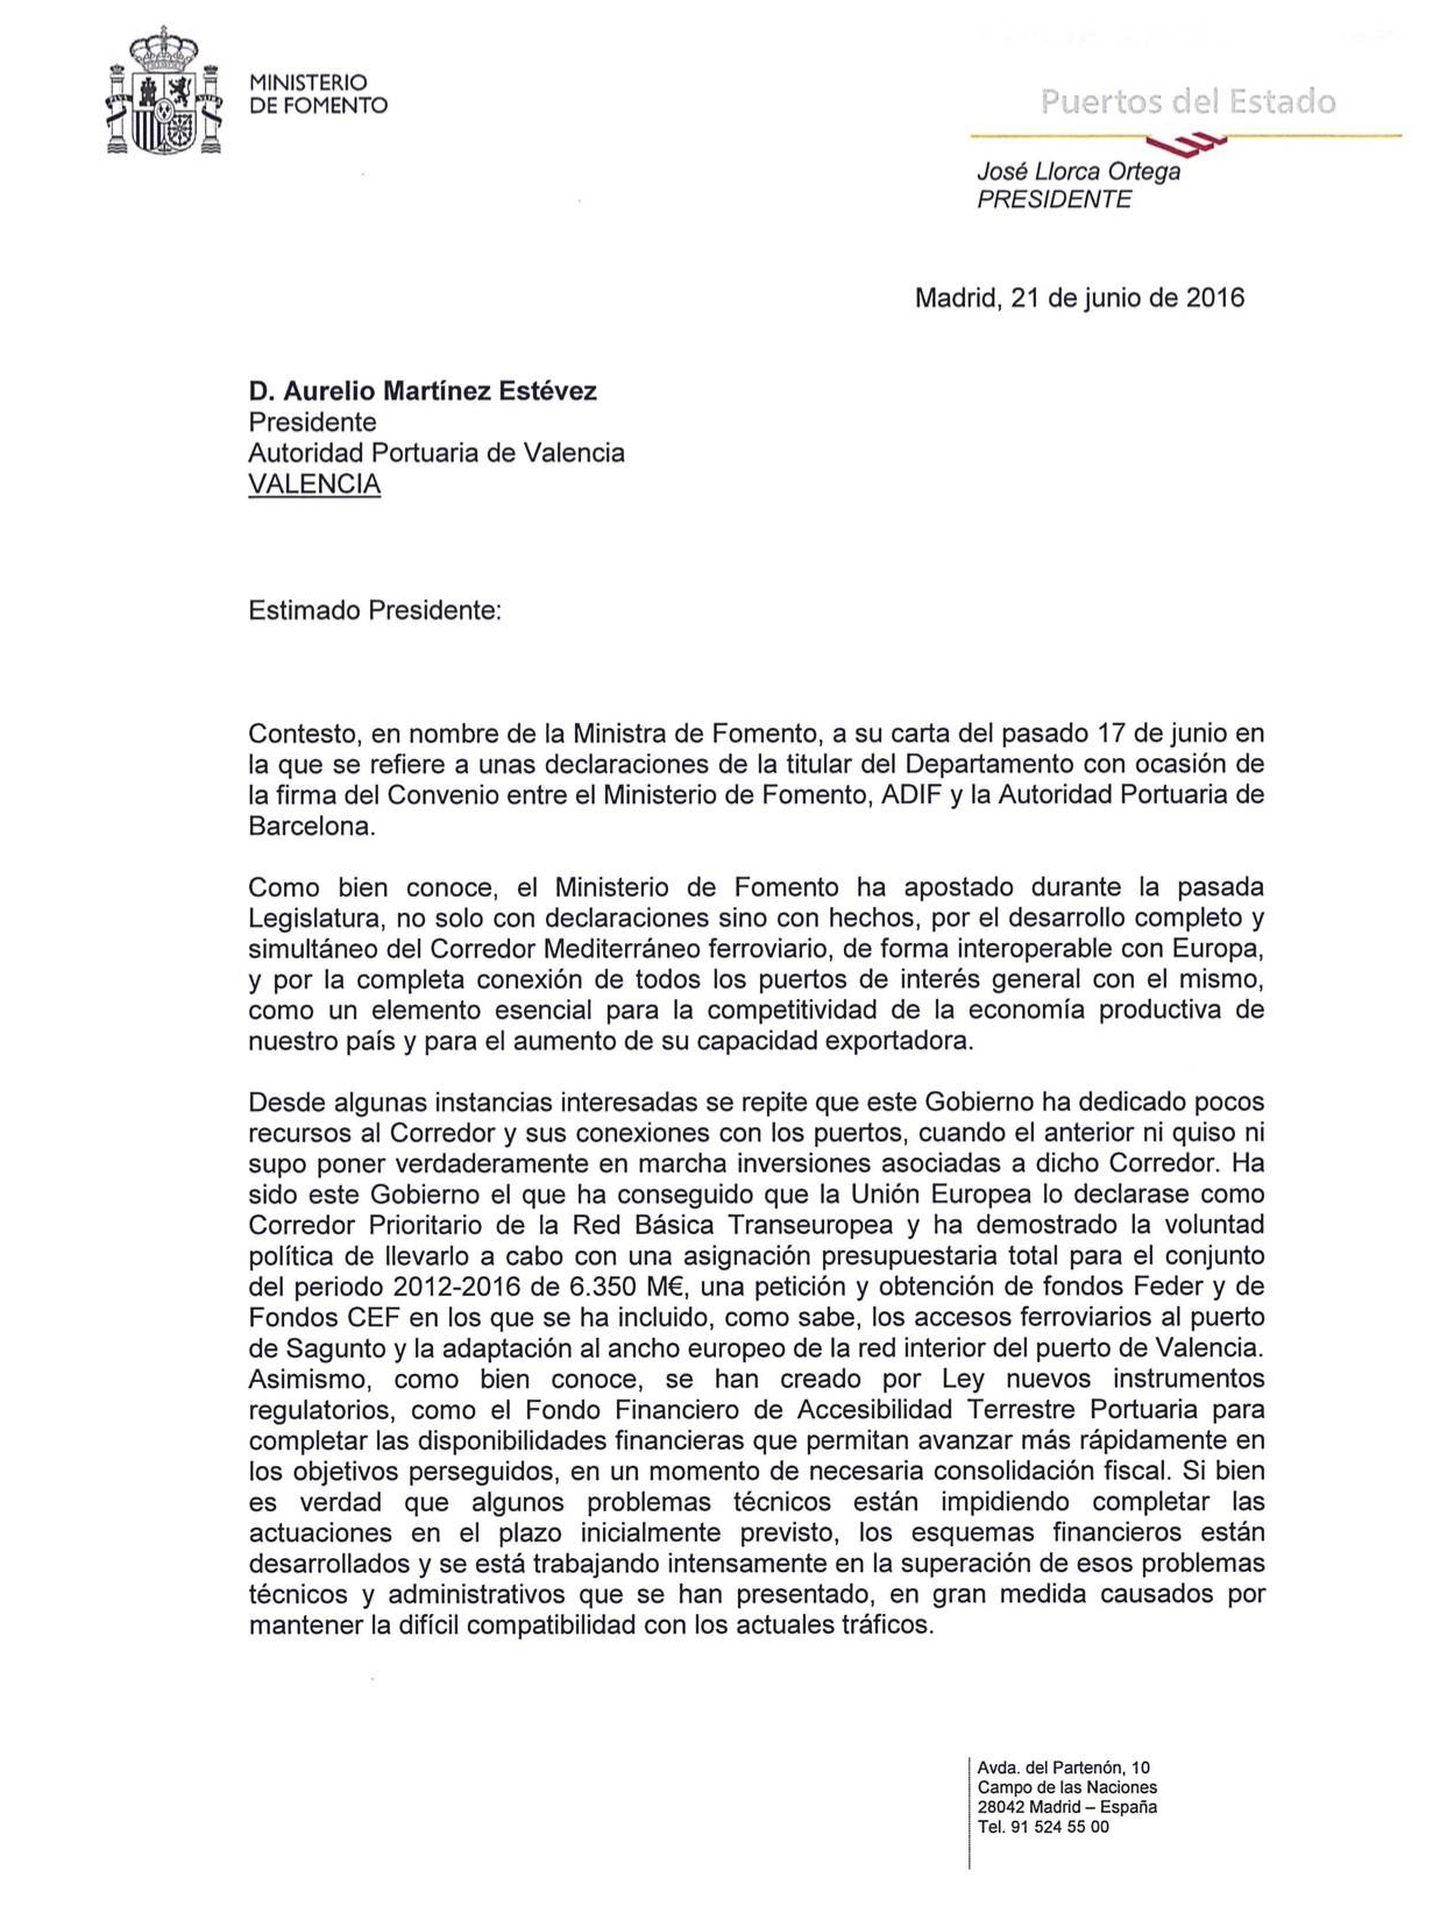 Pinche para leer la carta de José Llorca a Aurelio Martínez.